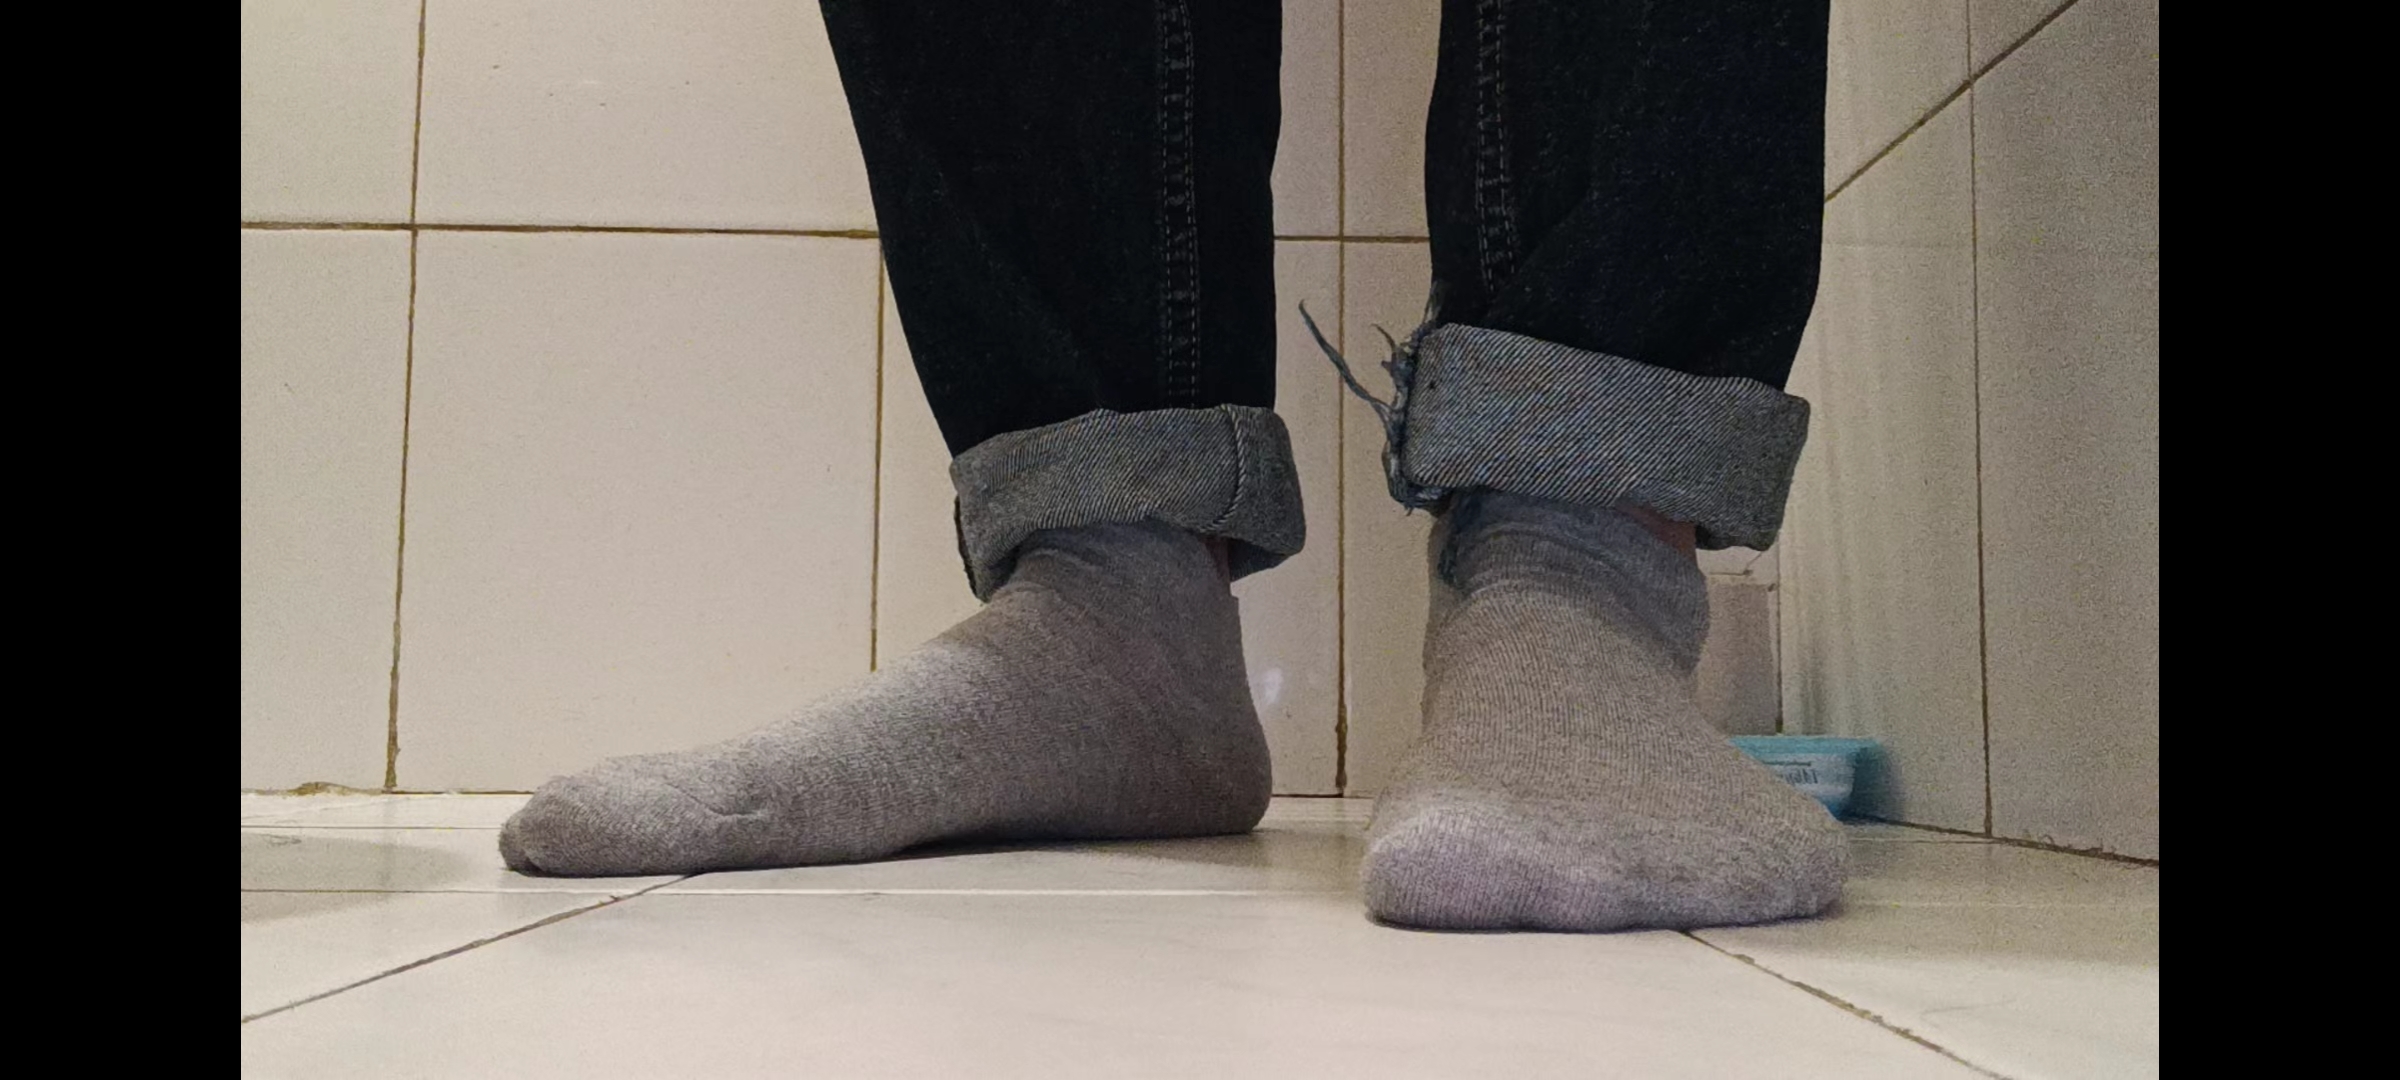 My teen feet on gray ankle socks